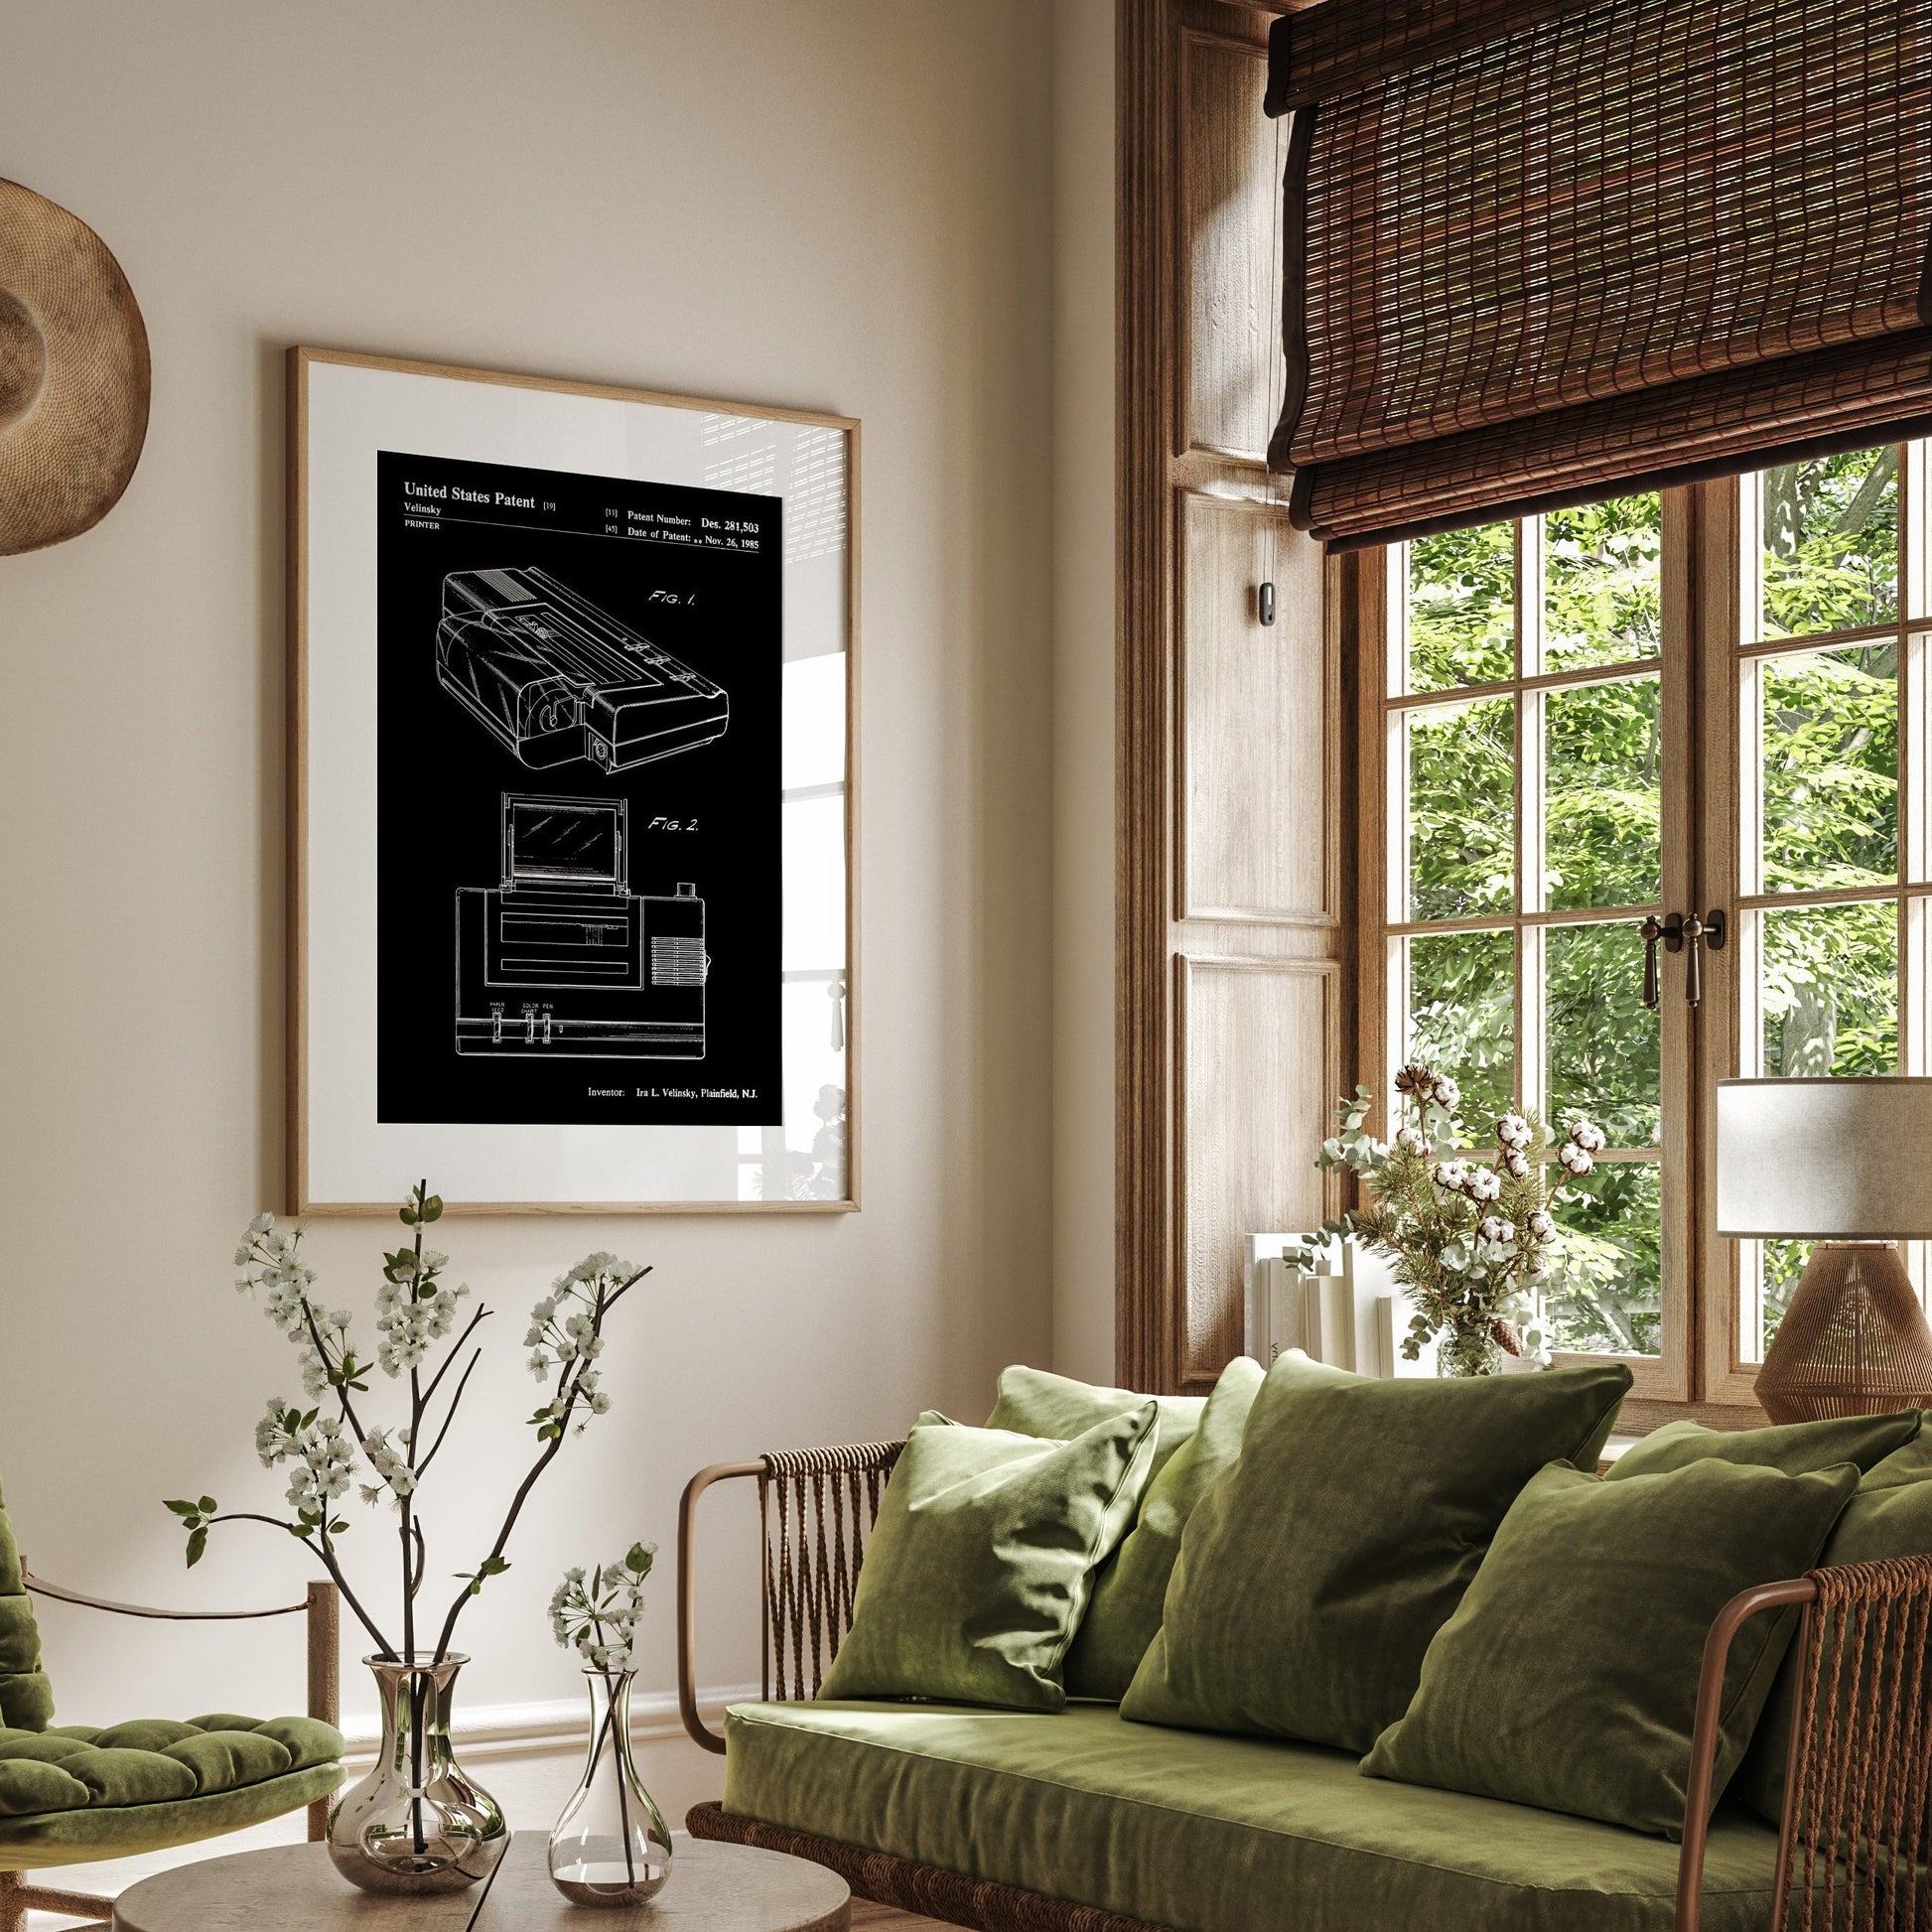 Commodore Printer 1985 Patent Print - Magic Posters